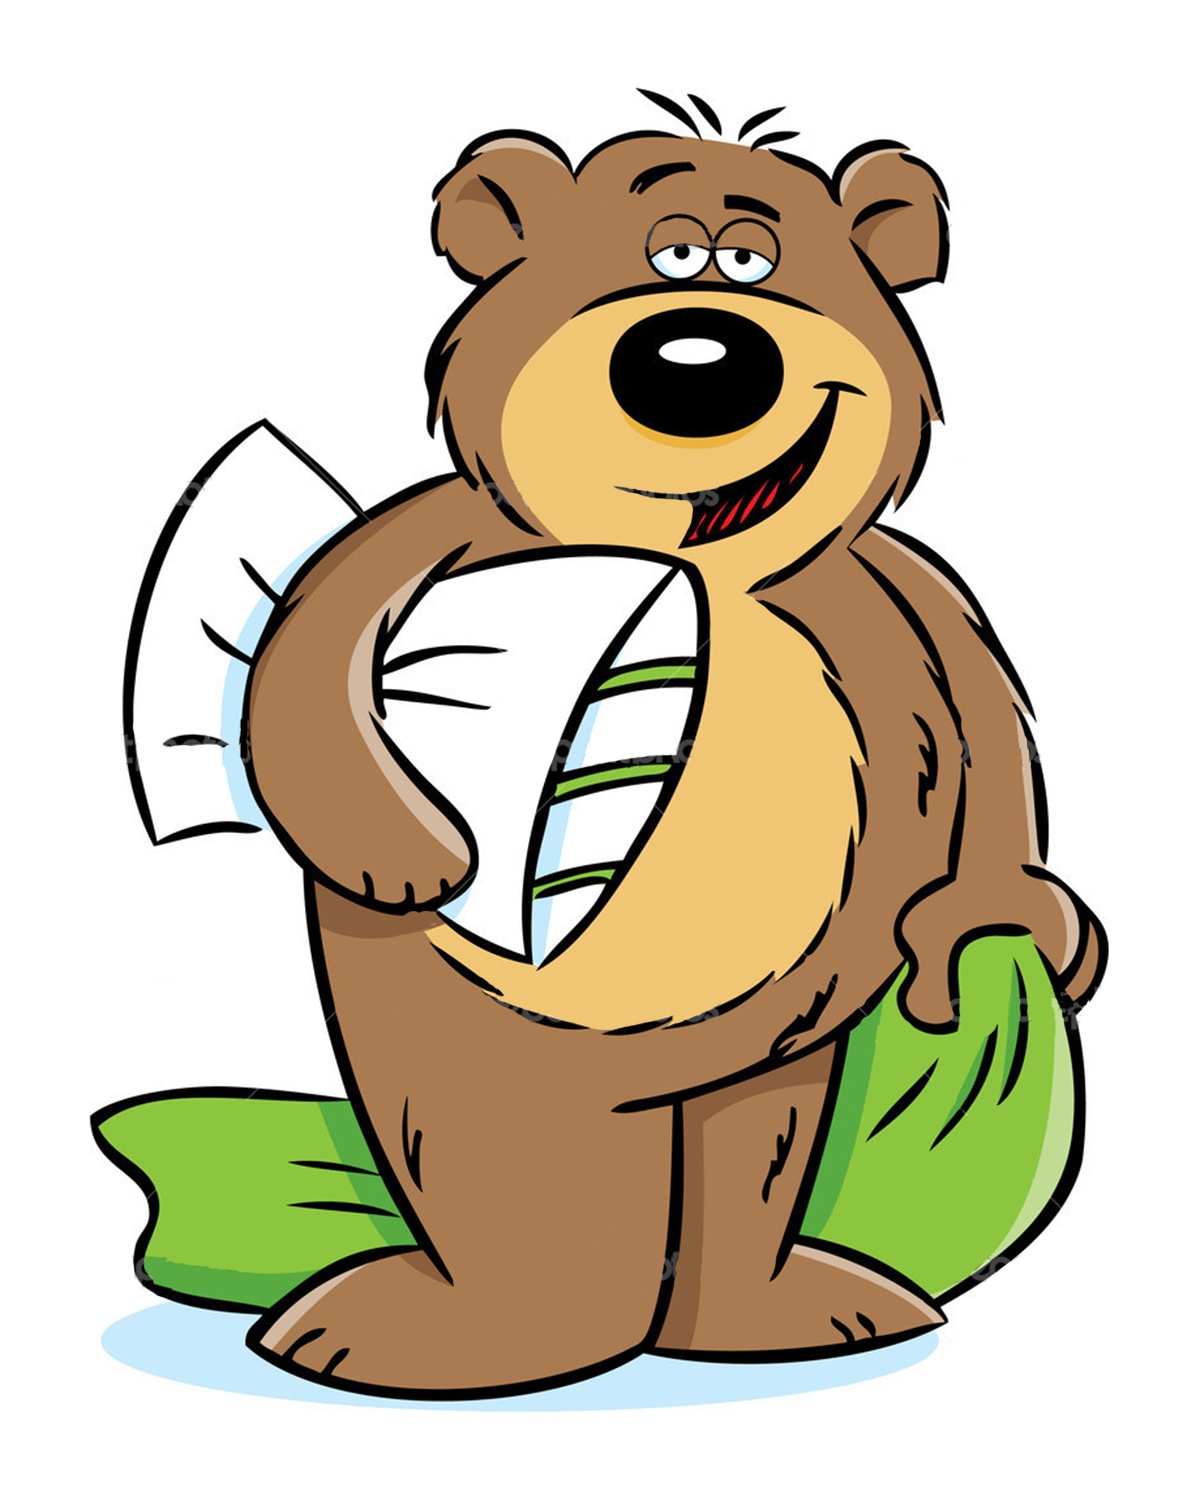 Cartoon Images Of Bears